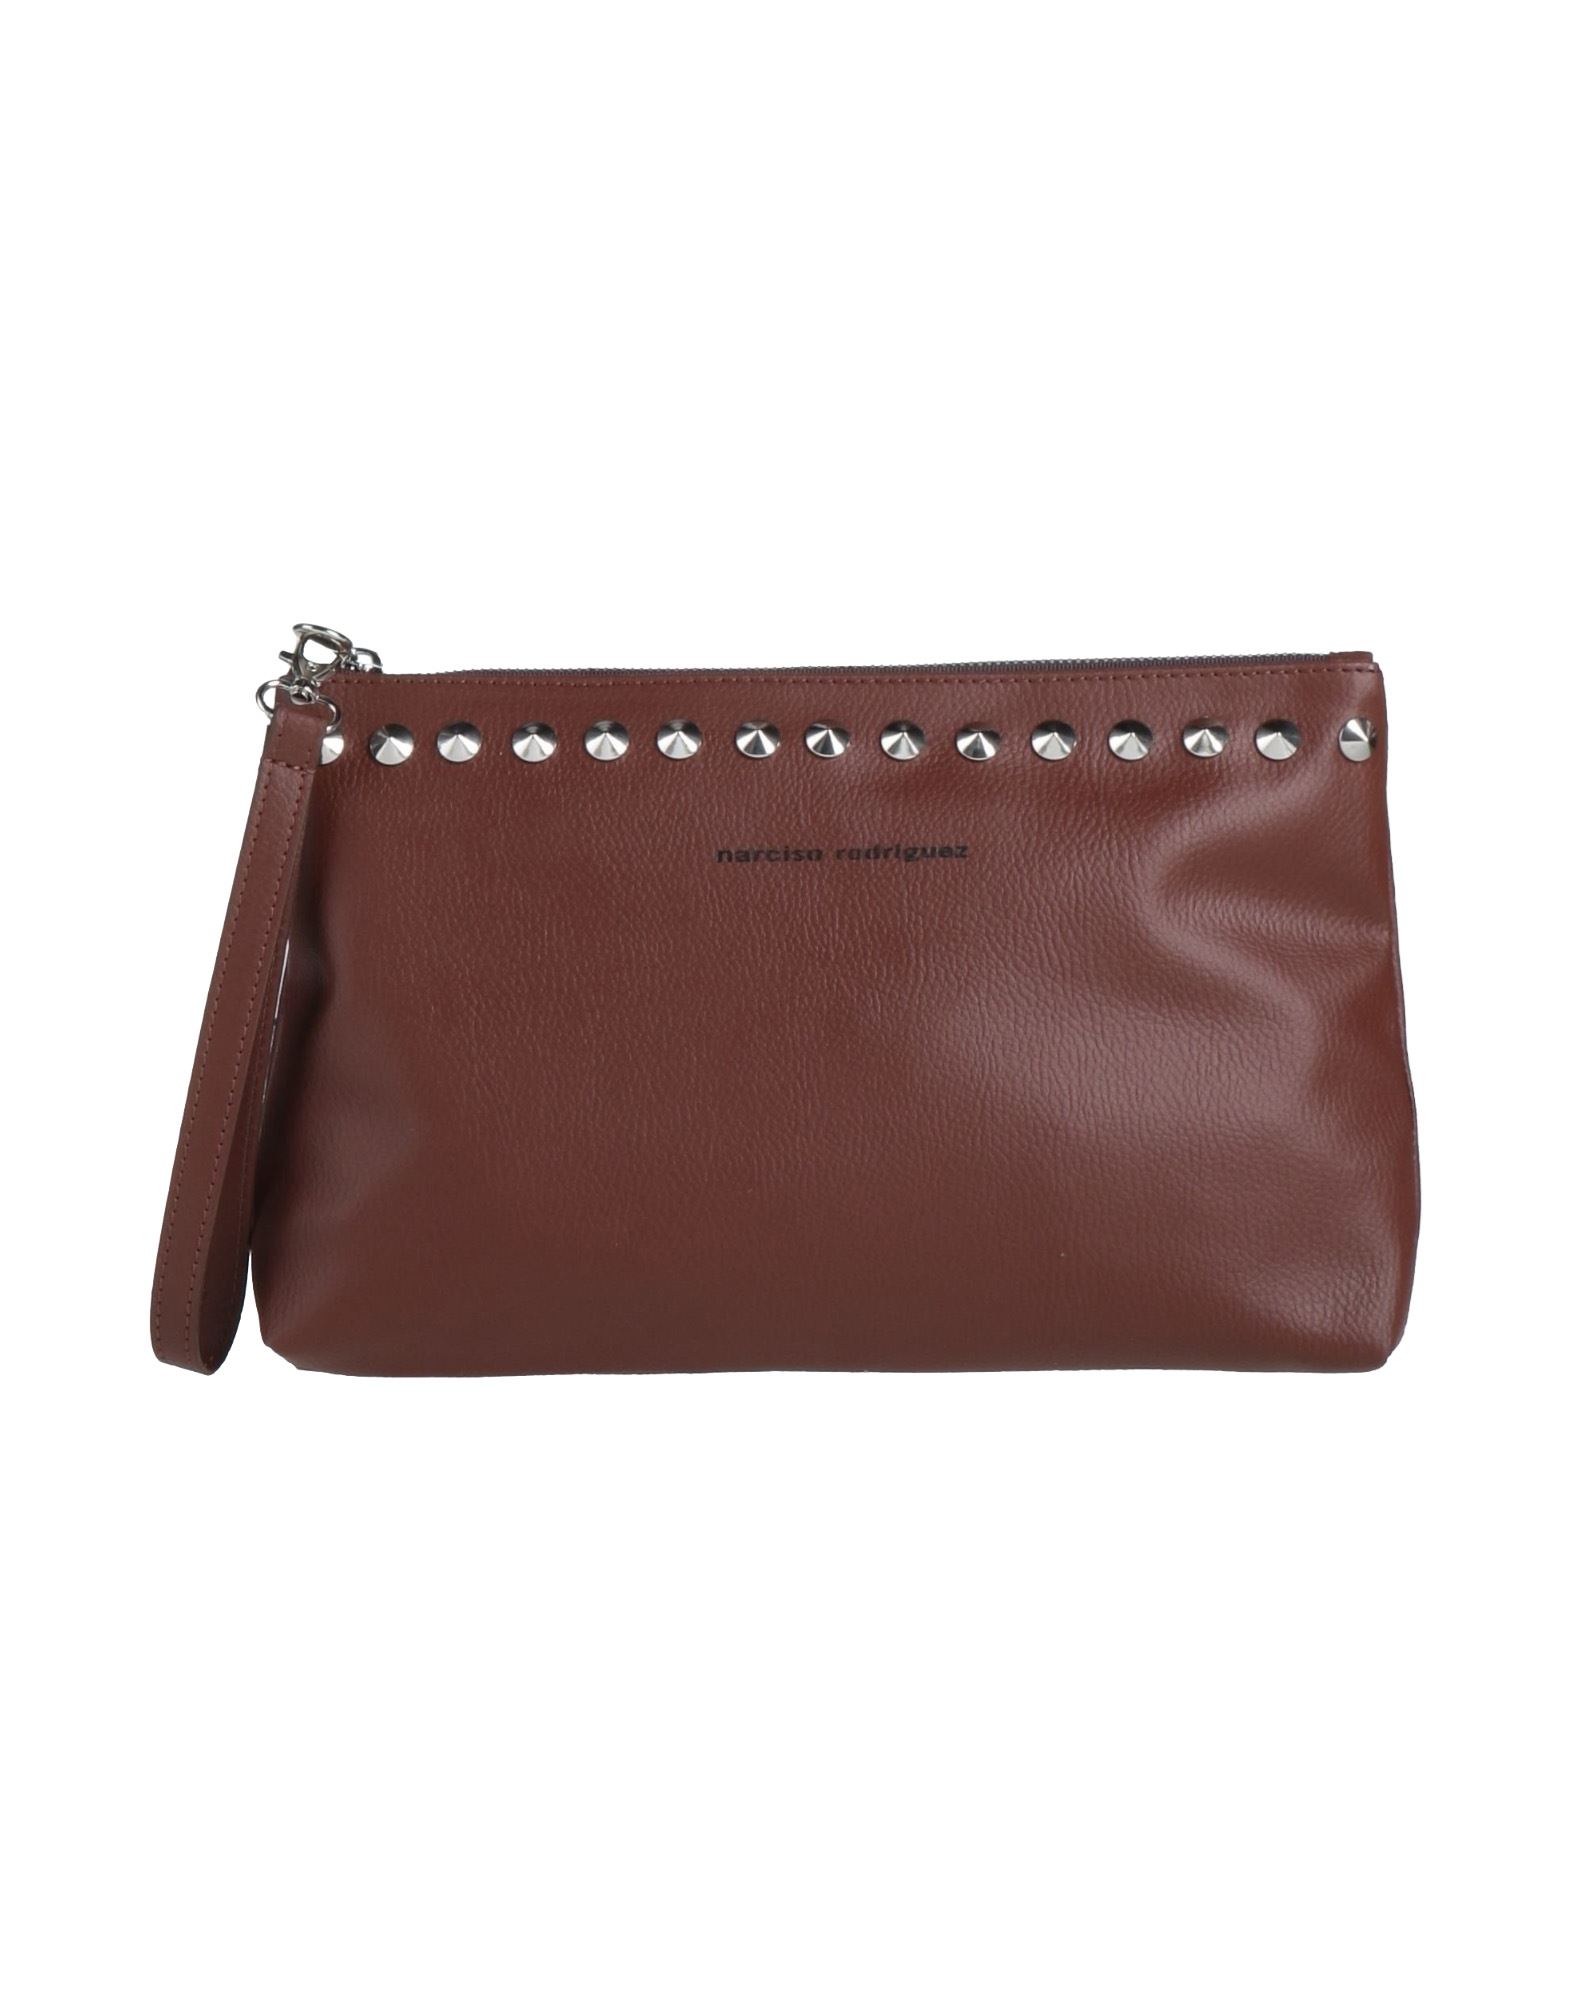 Narciso Rodriguez Handbags In Brown